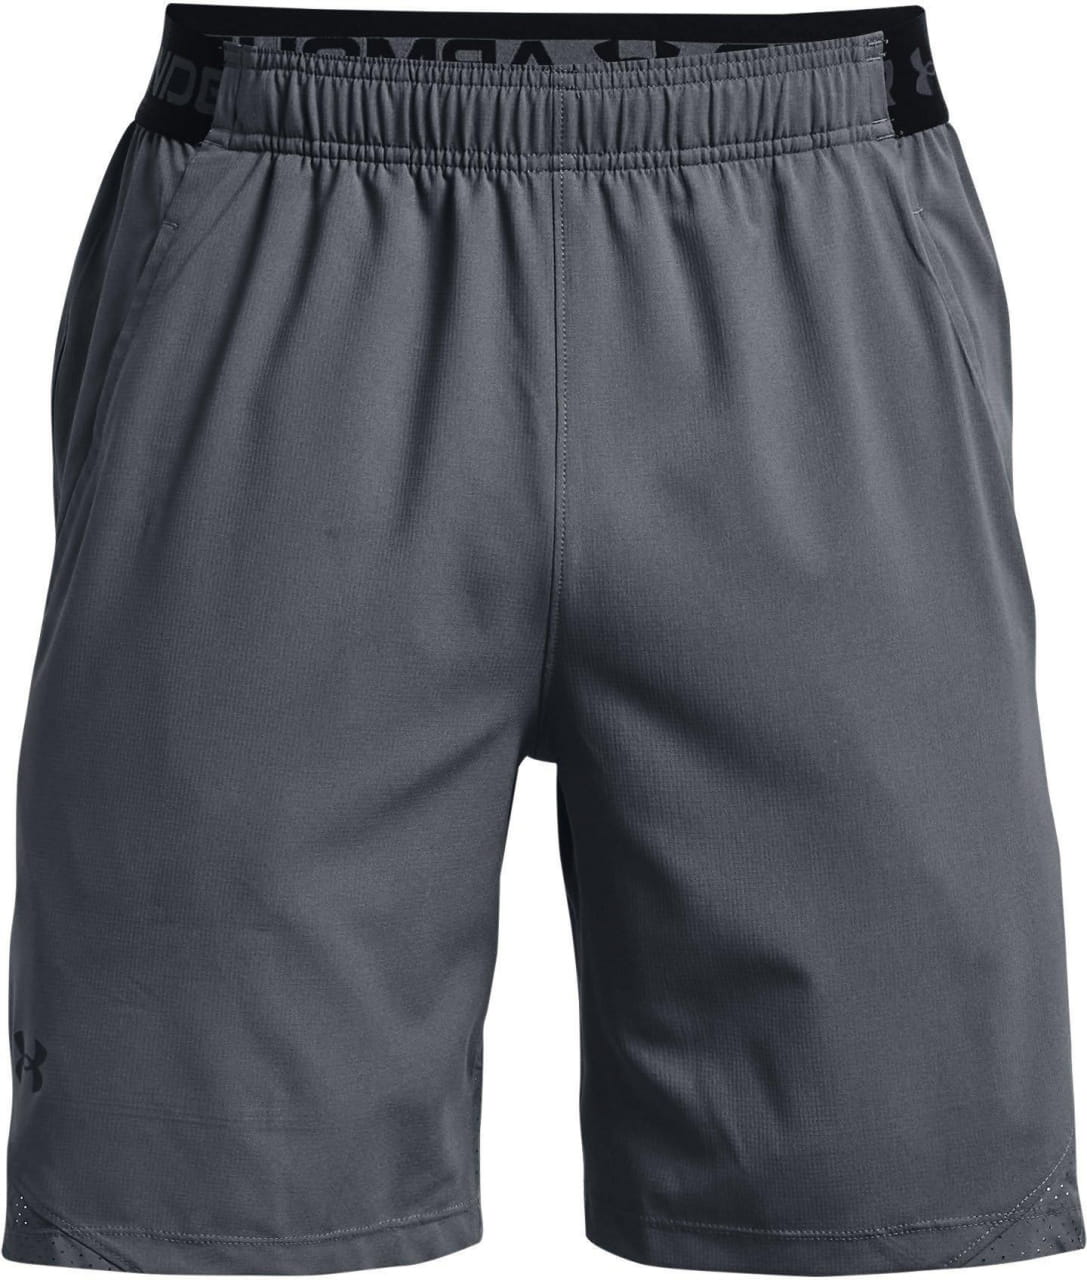 Moške športne hlače Under Armour Vanish Woven 8in Shorts-GRY